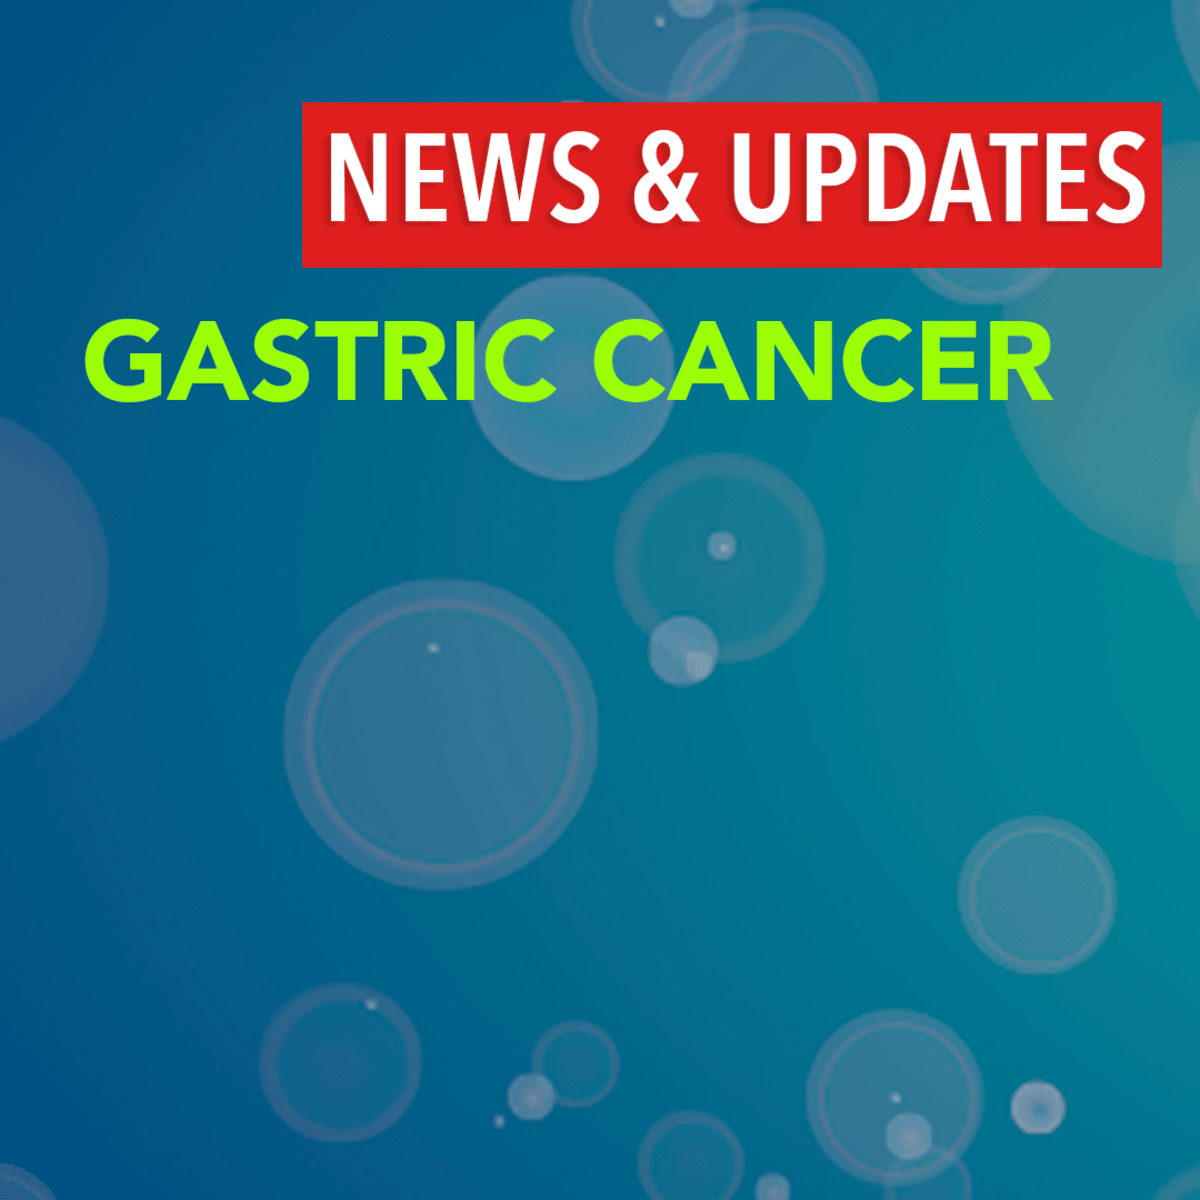 Cancer gastric